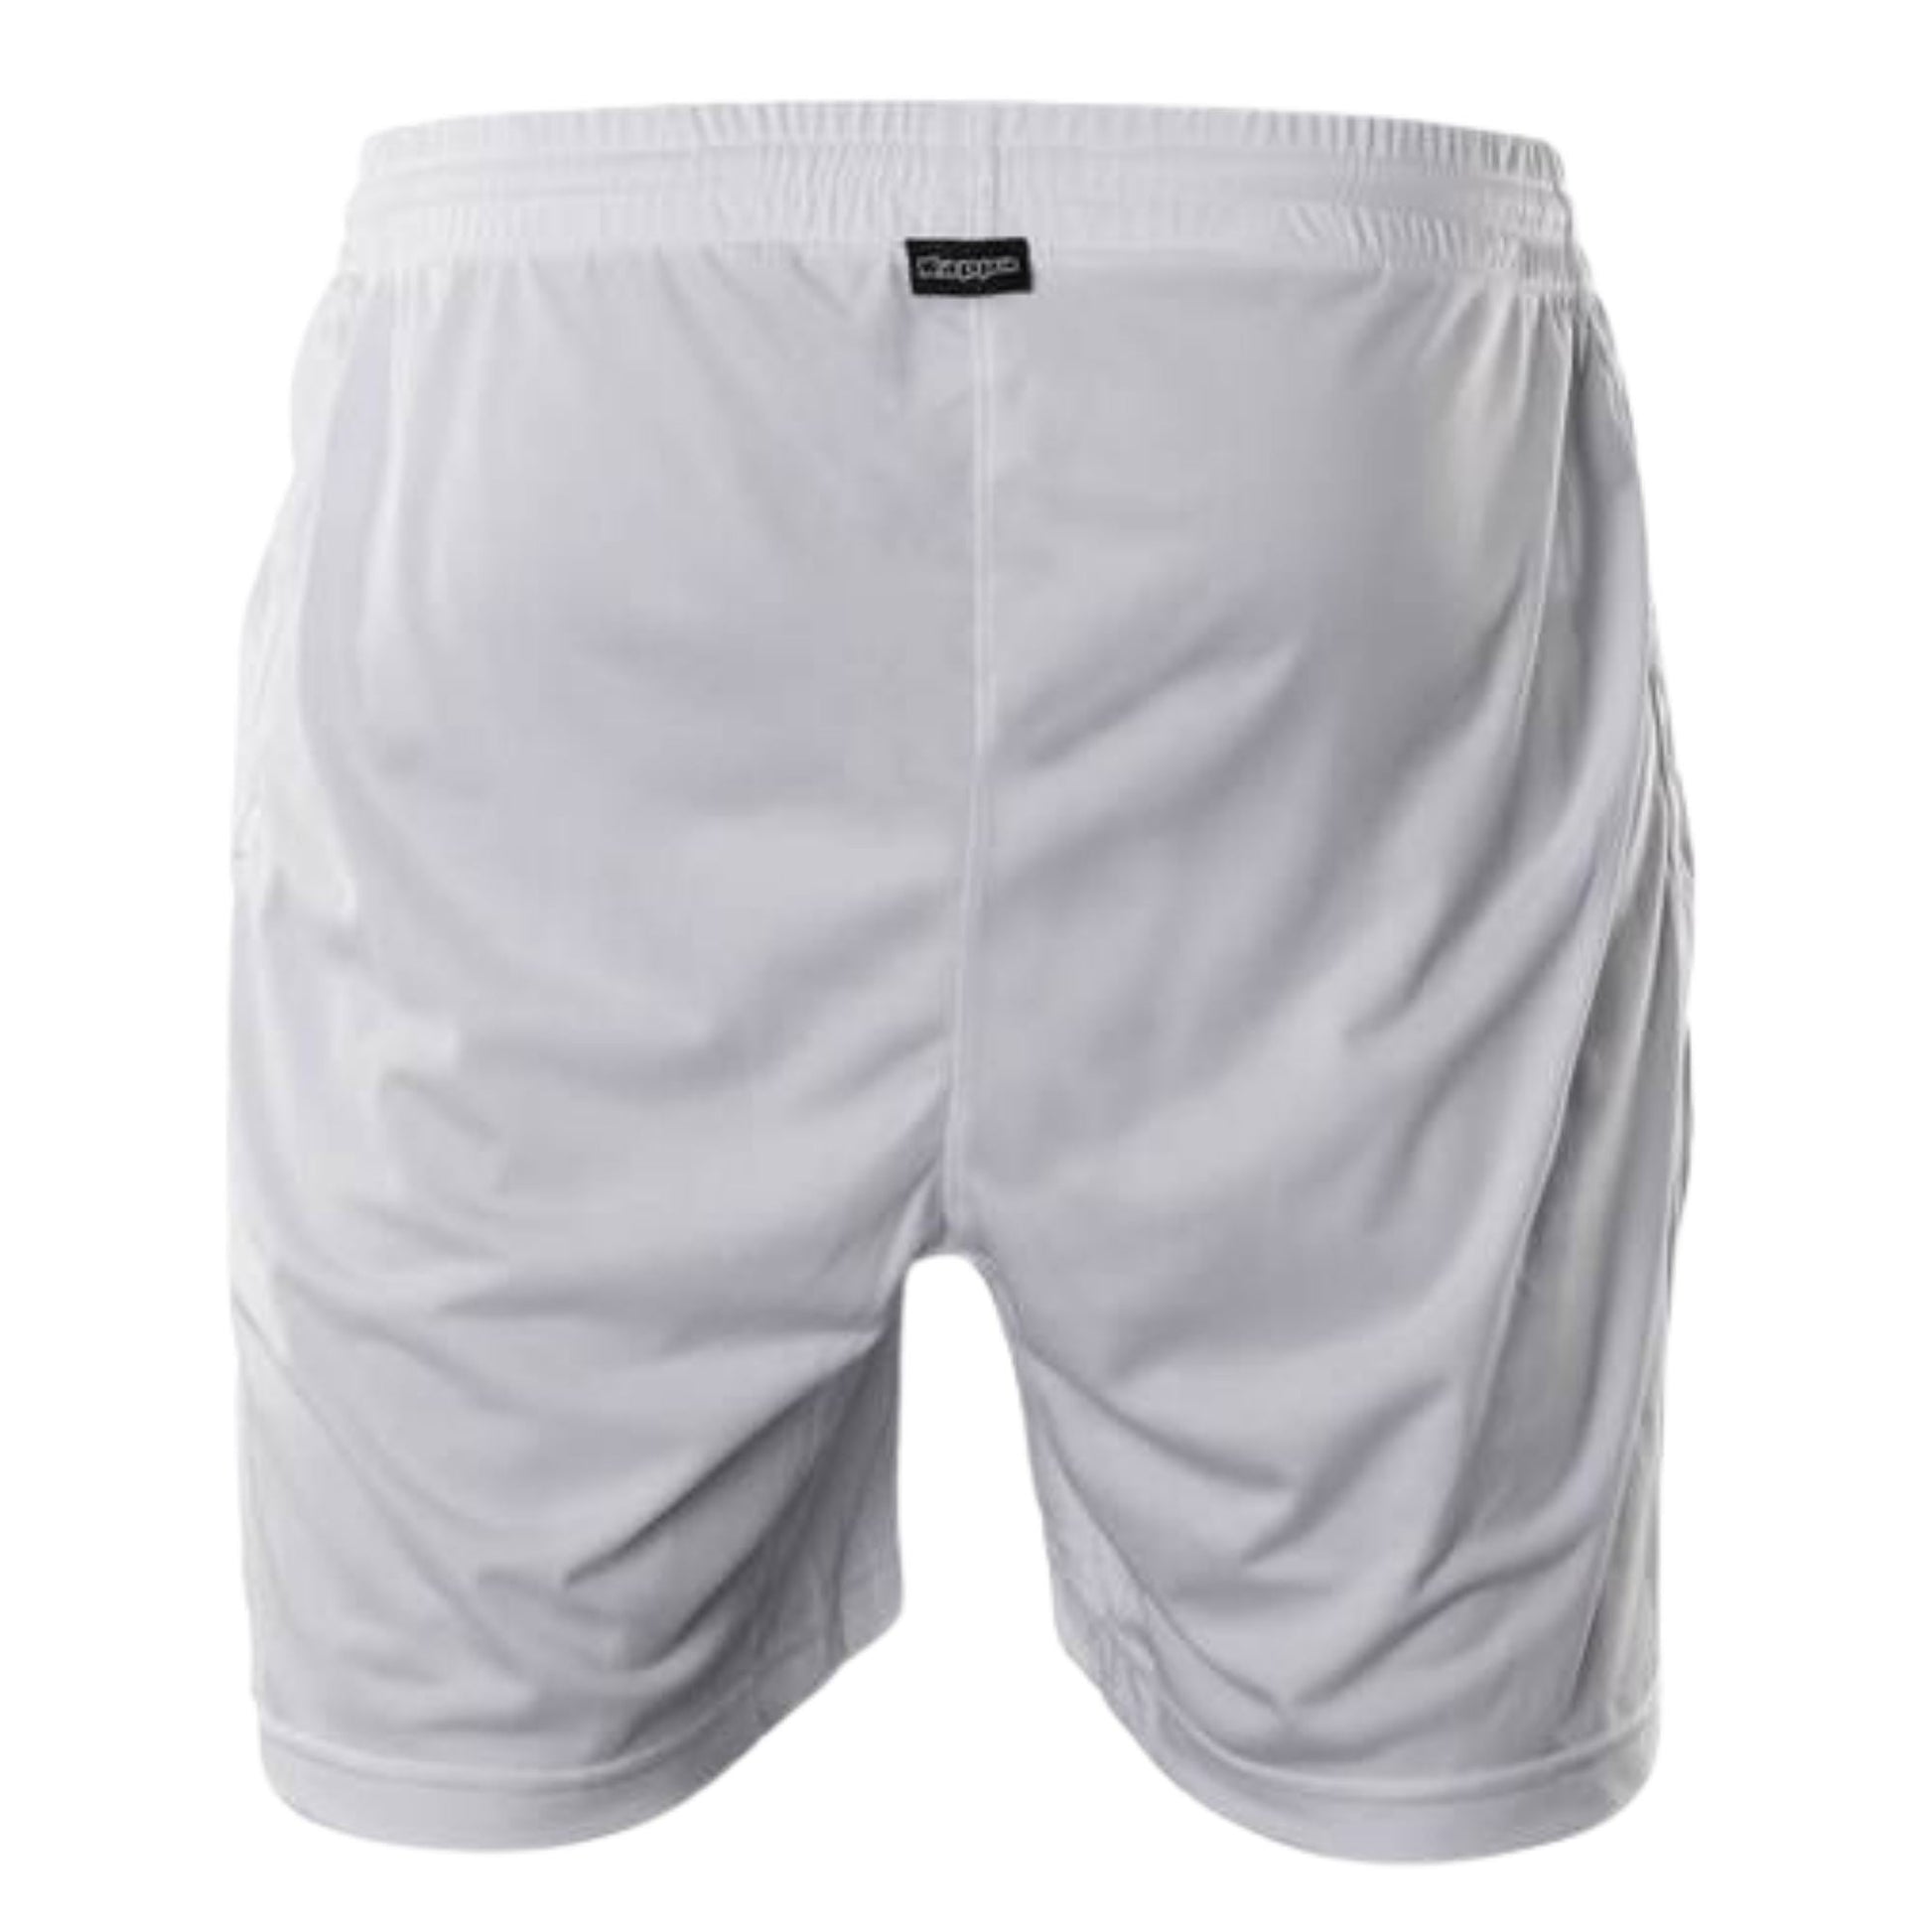 Kappa Unisex Shorts Shorts KAPPA 